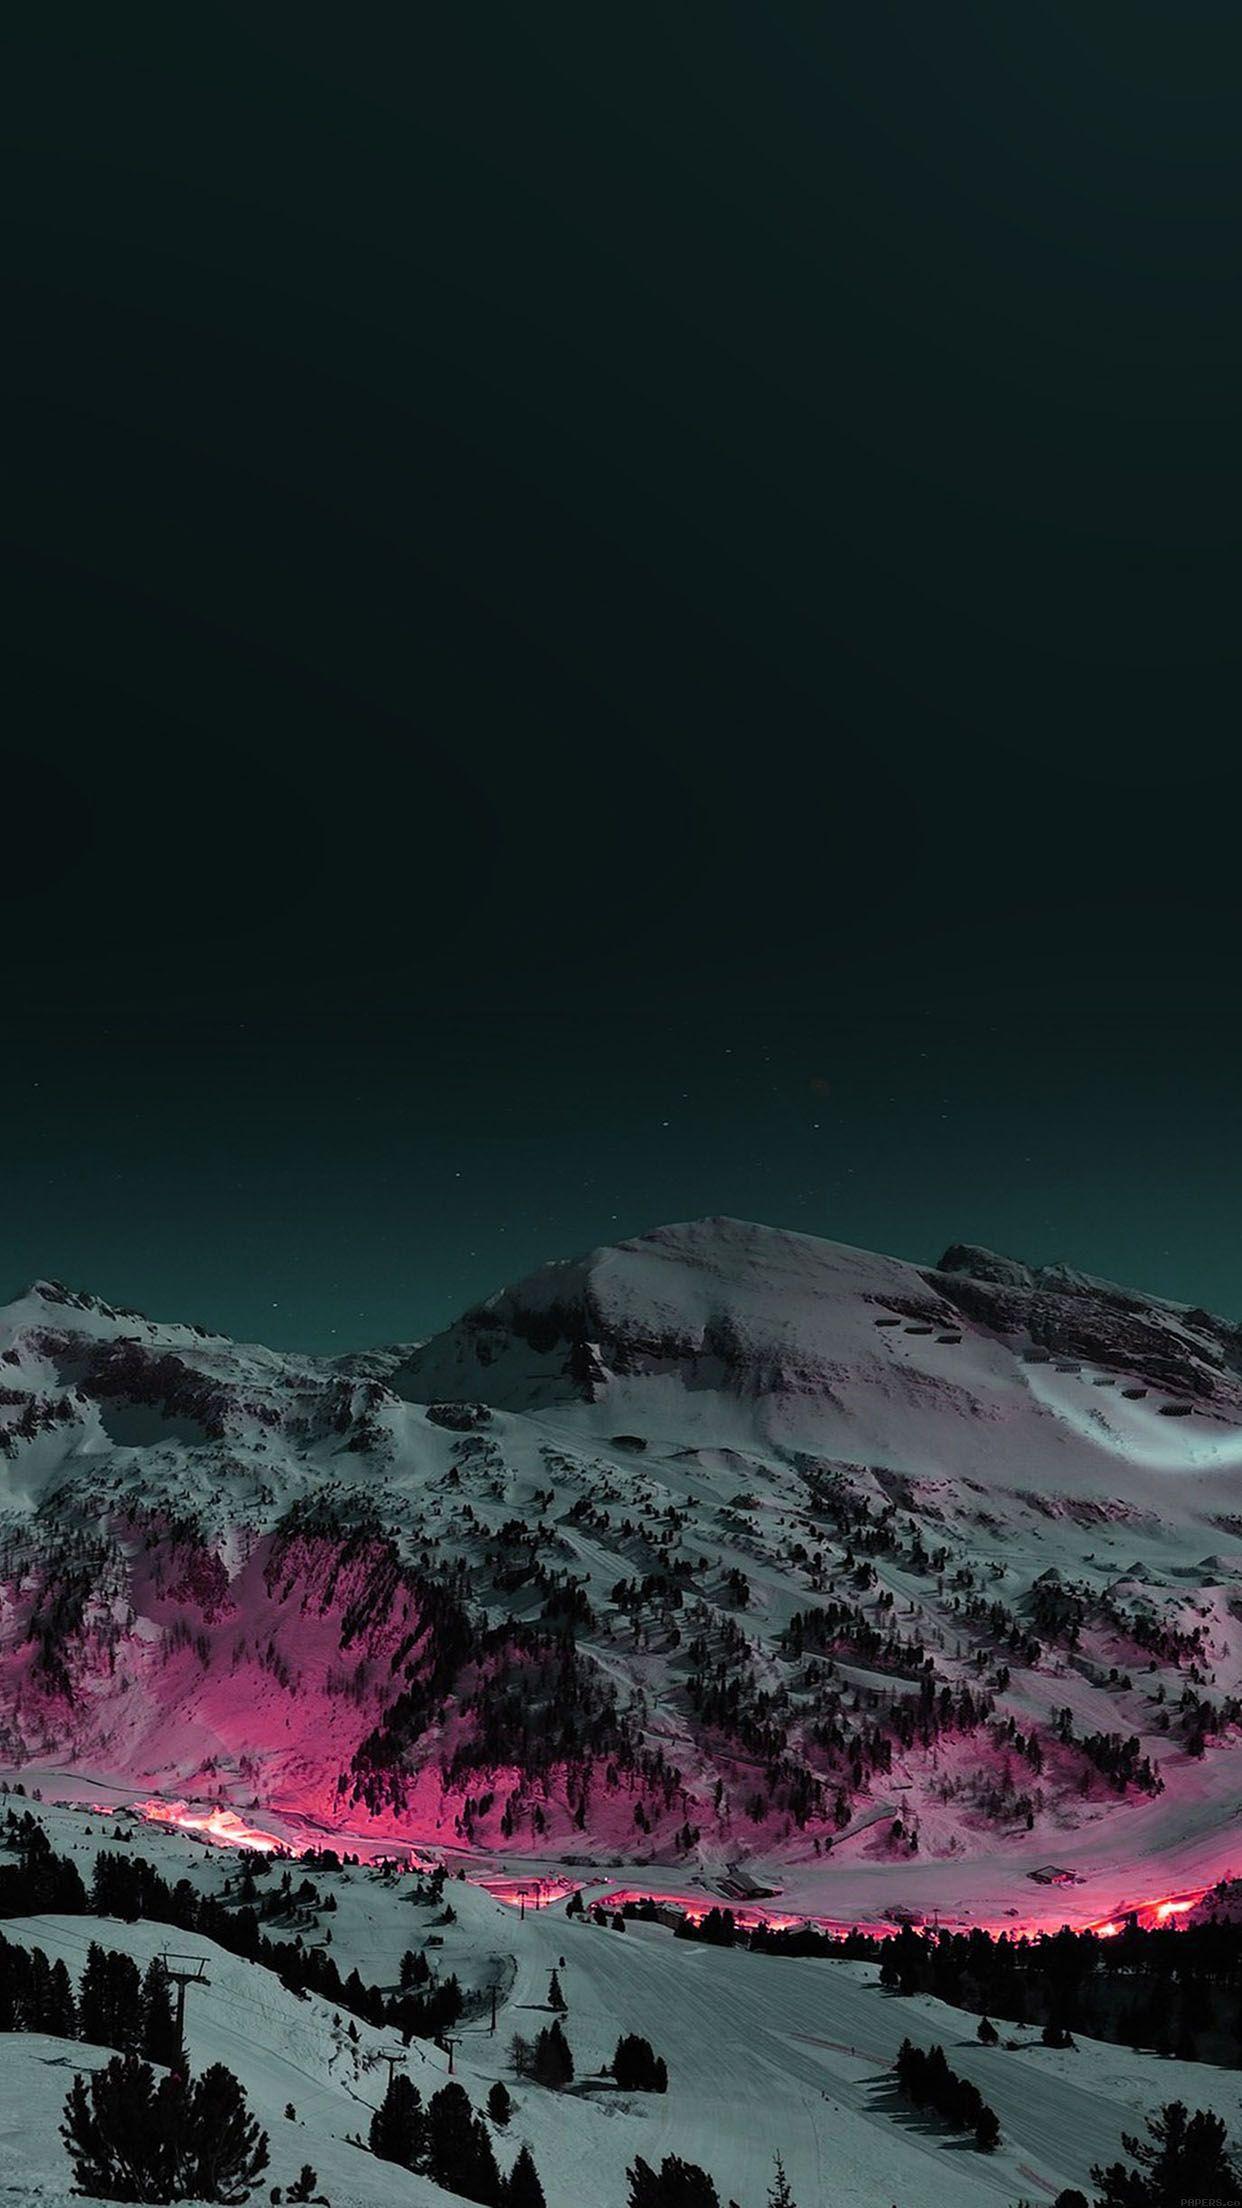 Alpine mountain at night. Snow, lights. iPhone wallpaper